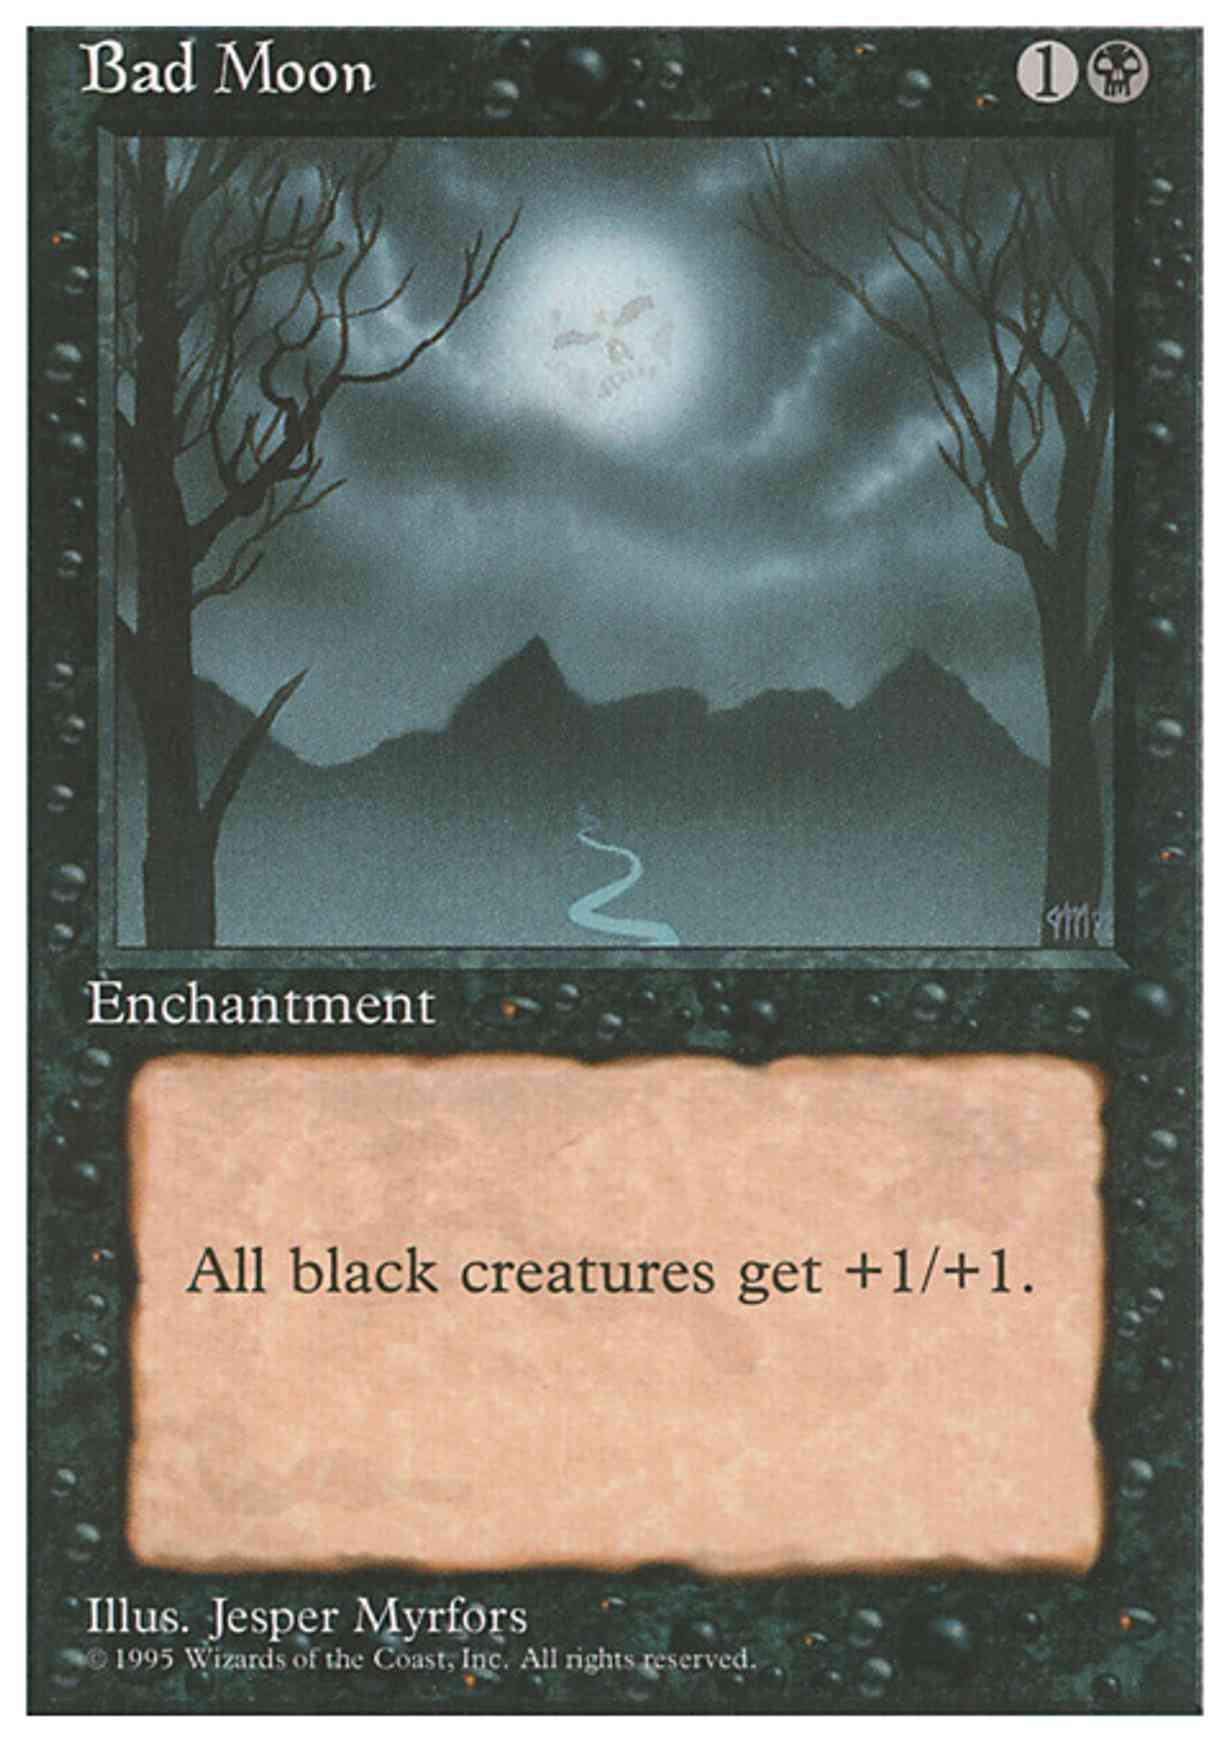 Bad Moon magic card front